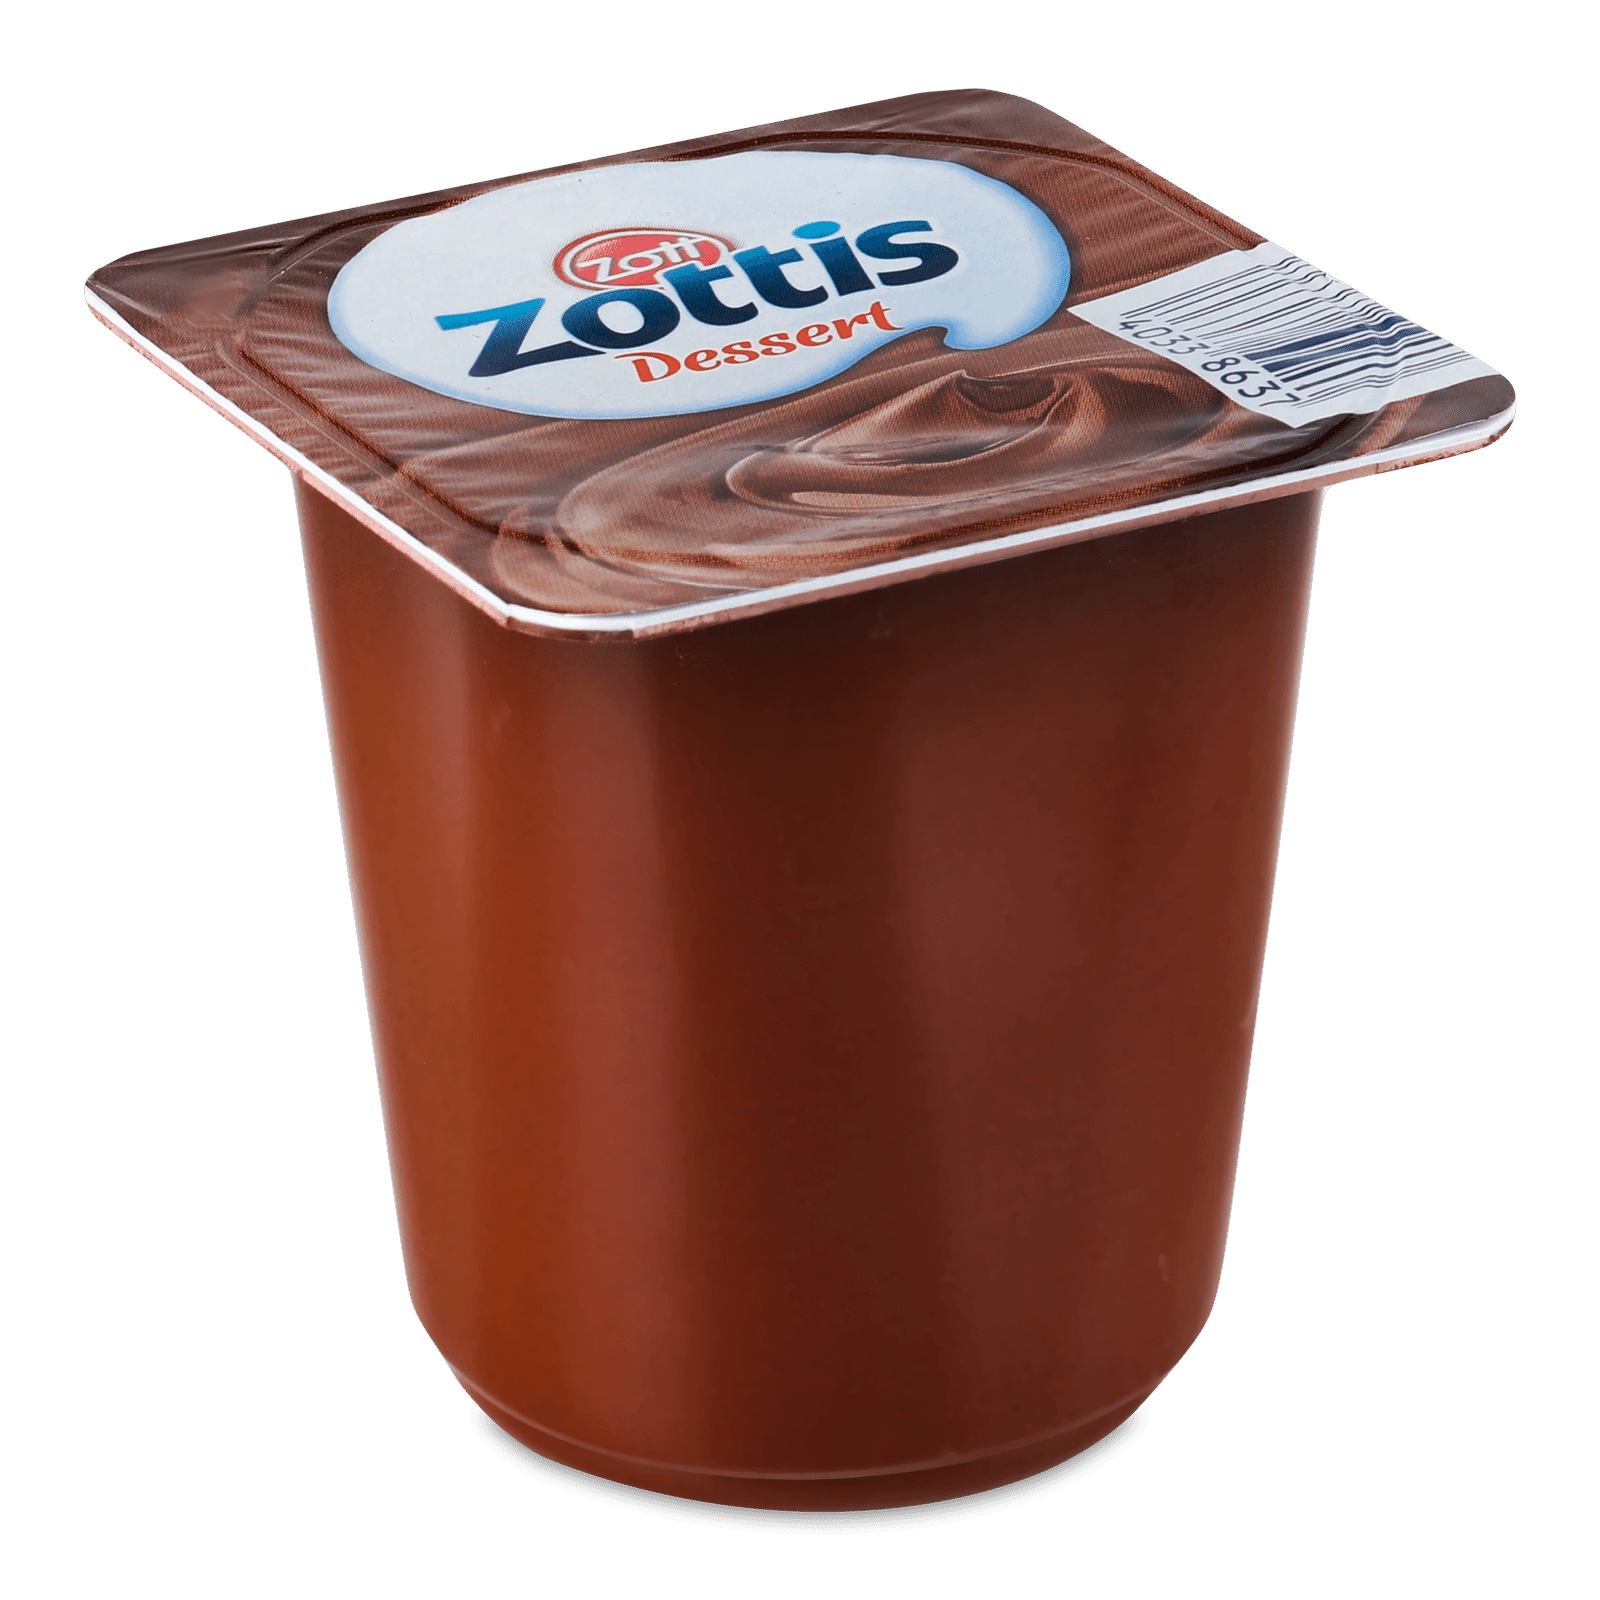 Десерт Zott Zottis шоколадний 2,4% - 1